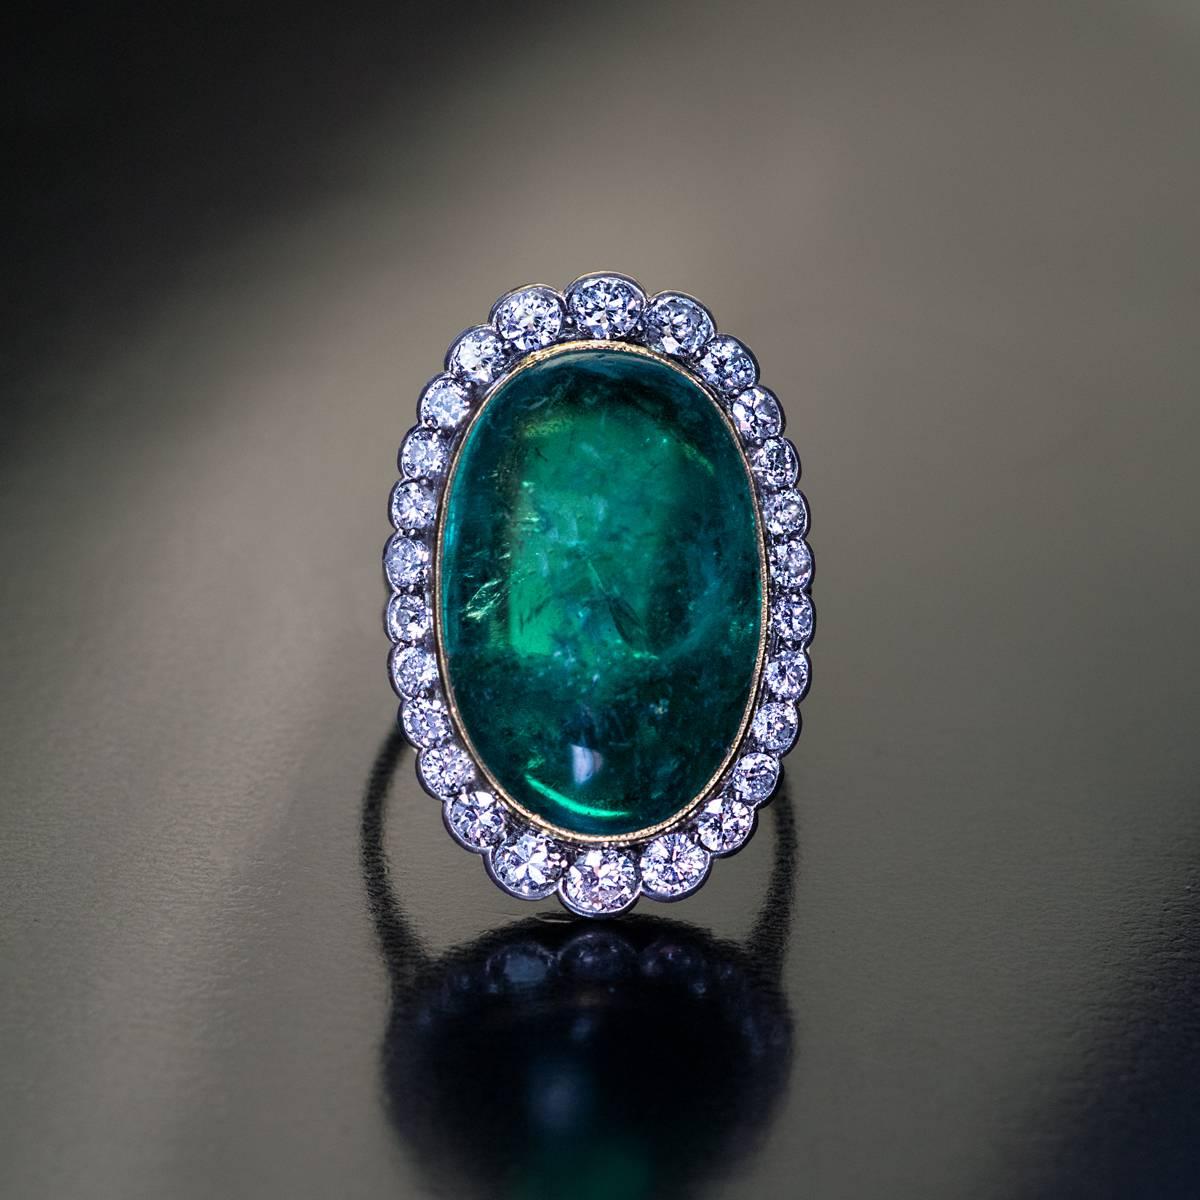 15 carat emerald cut diamond ring